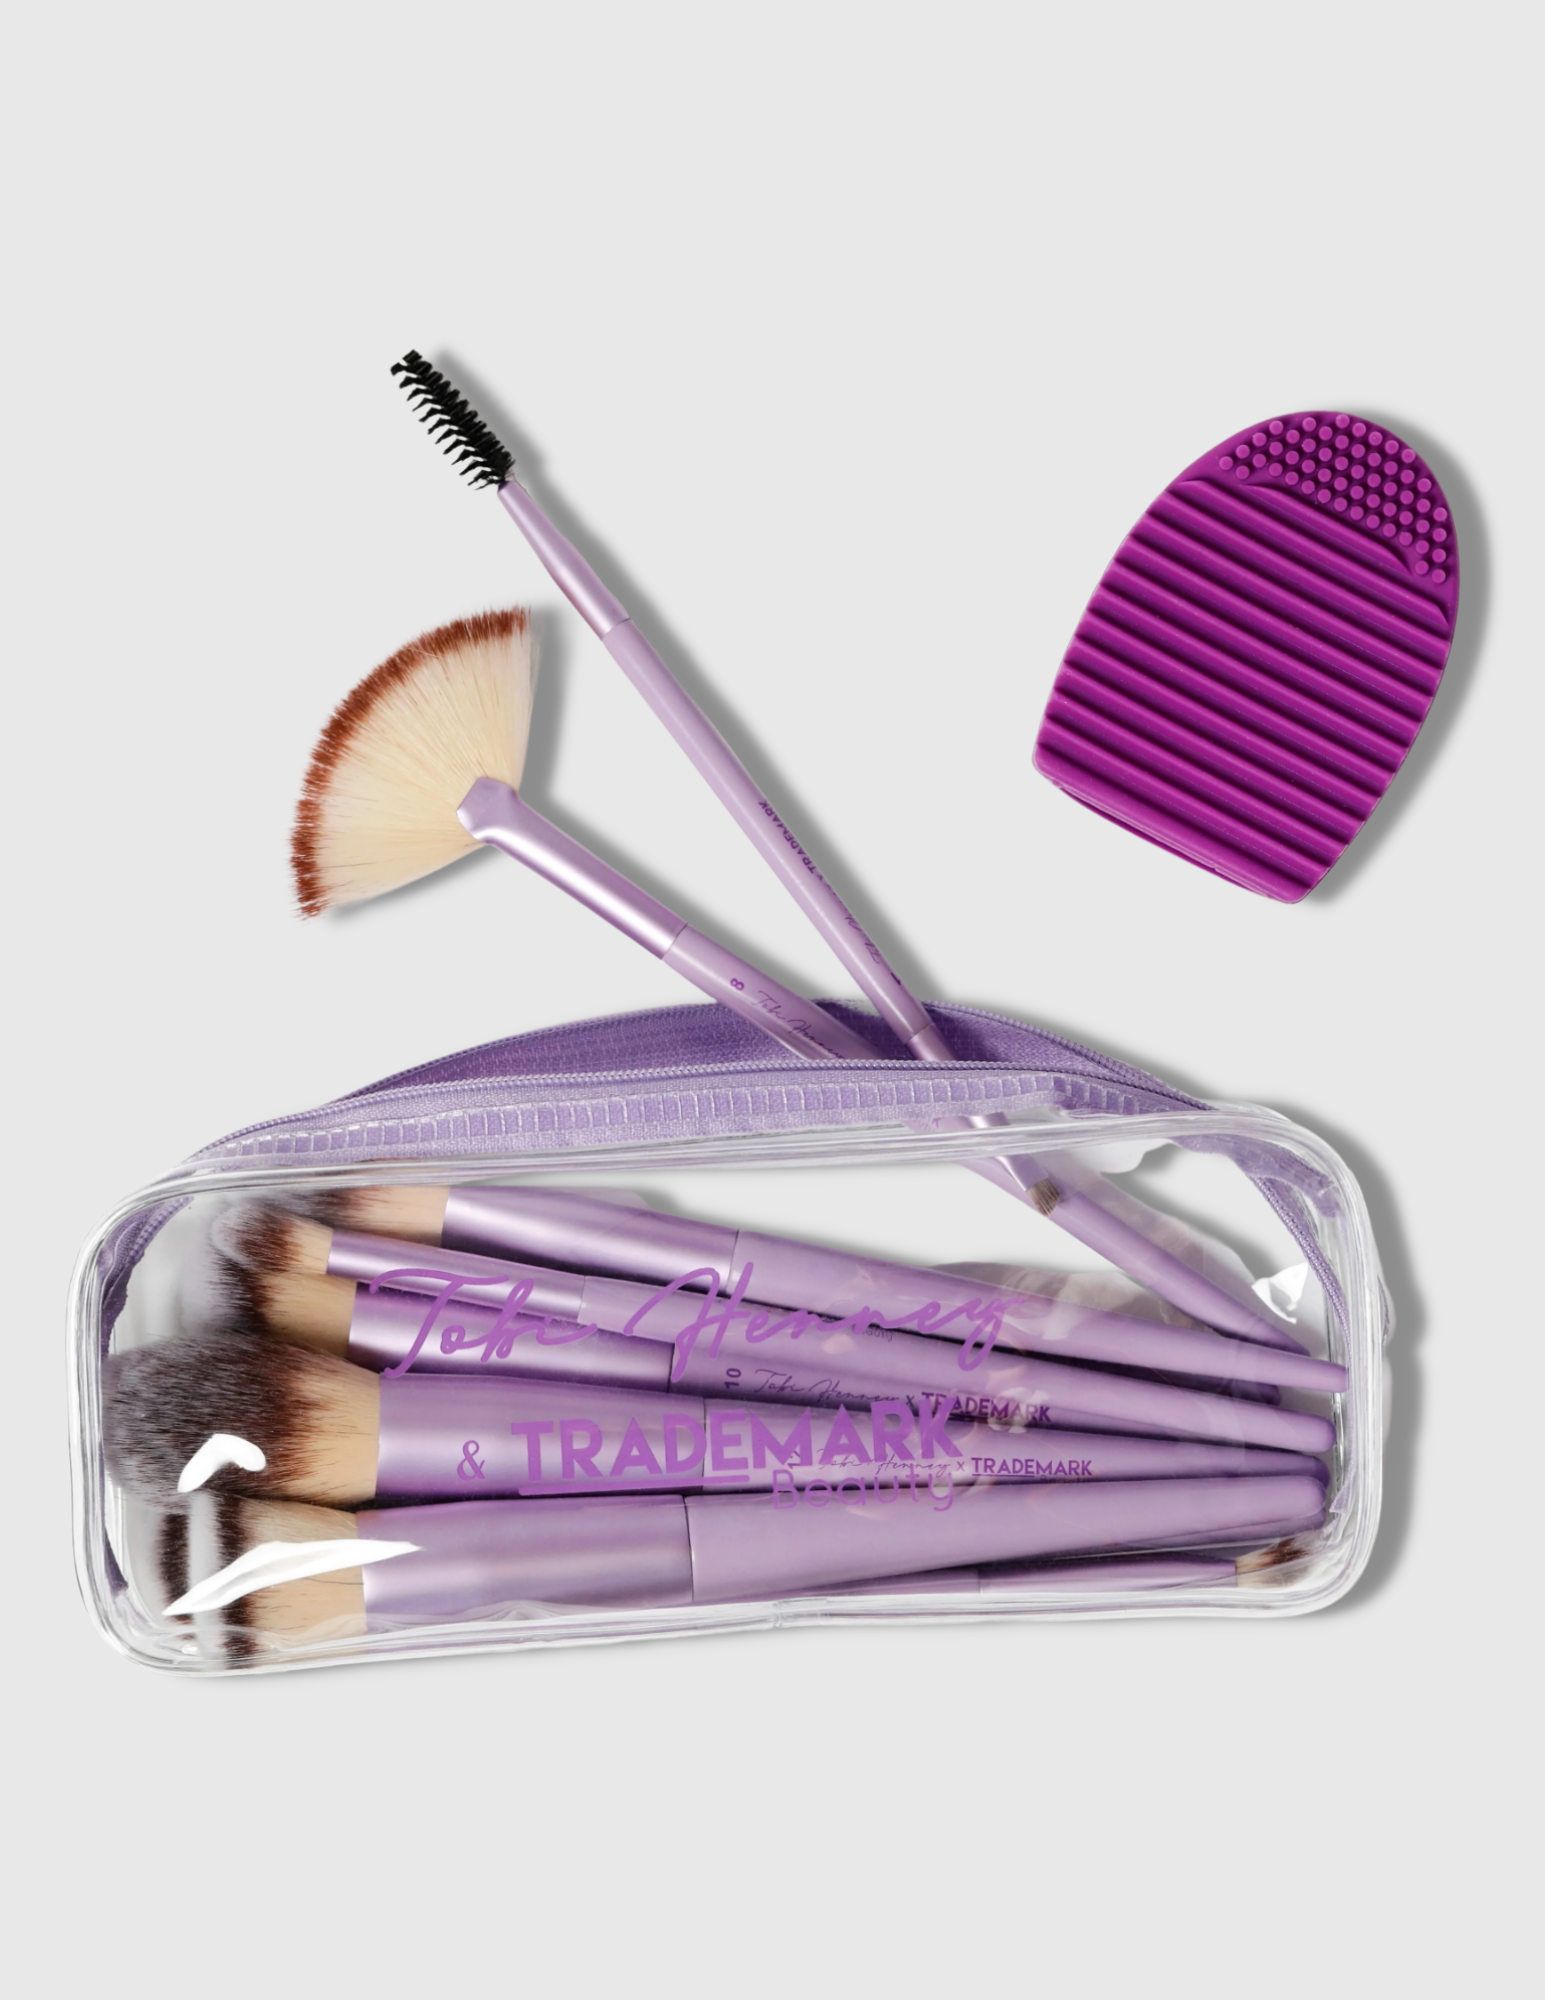 Blush Makeup Brush - #9 - Trademark Beauty